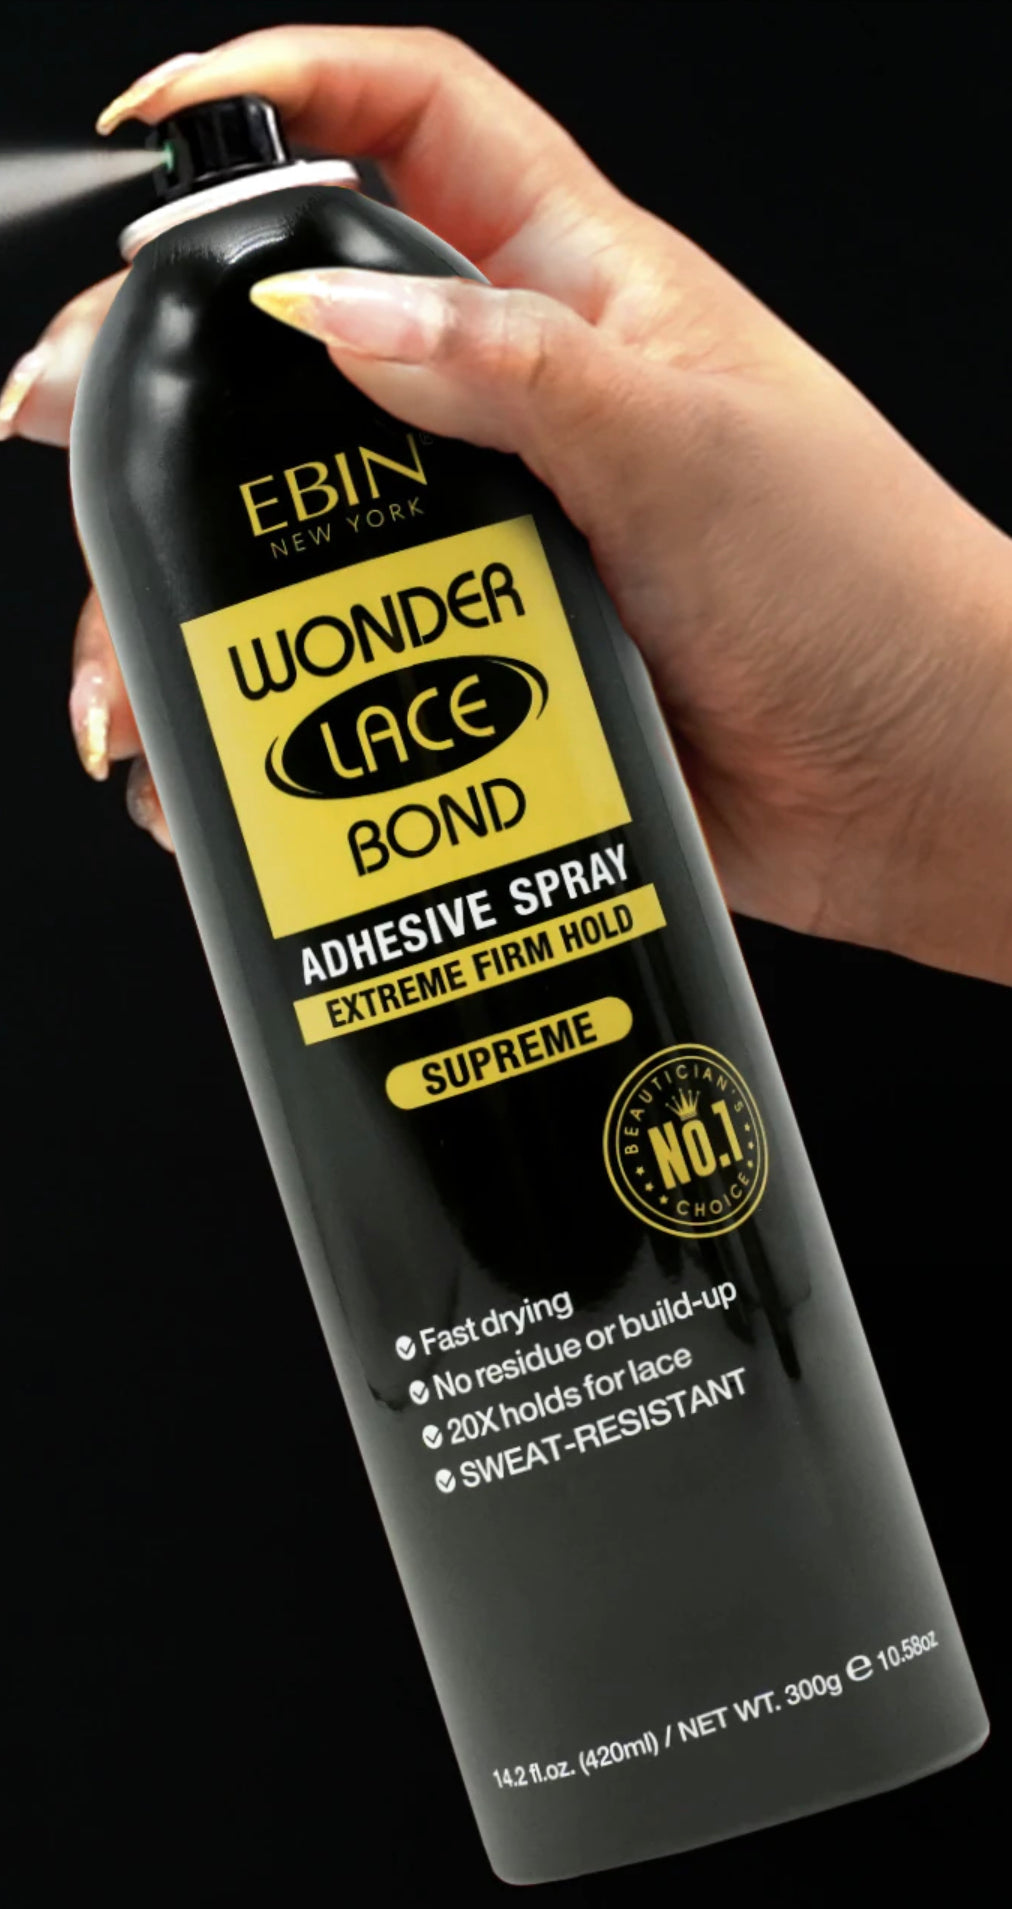 EBIN WONDER LACE BOND WIG ADHESIVE SPRAY - EXTREME FIRM HOLD